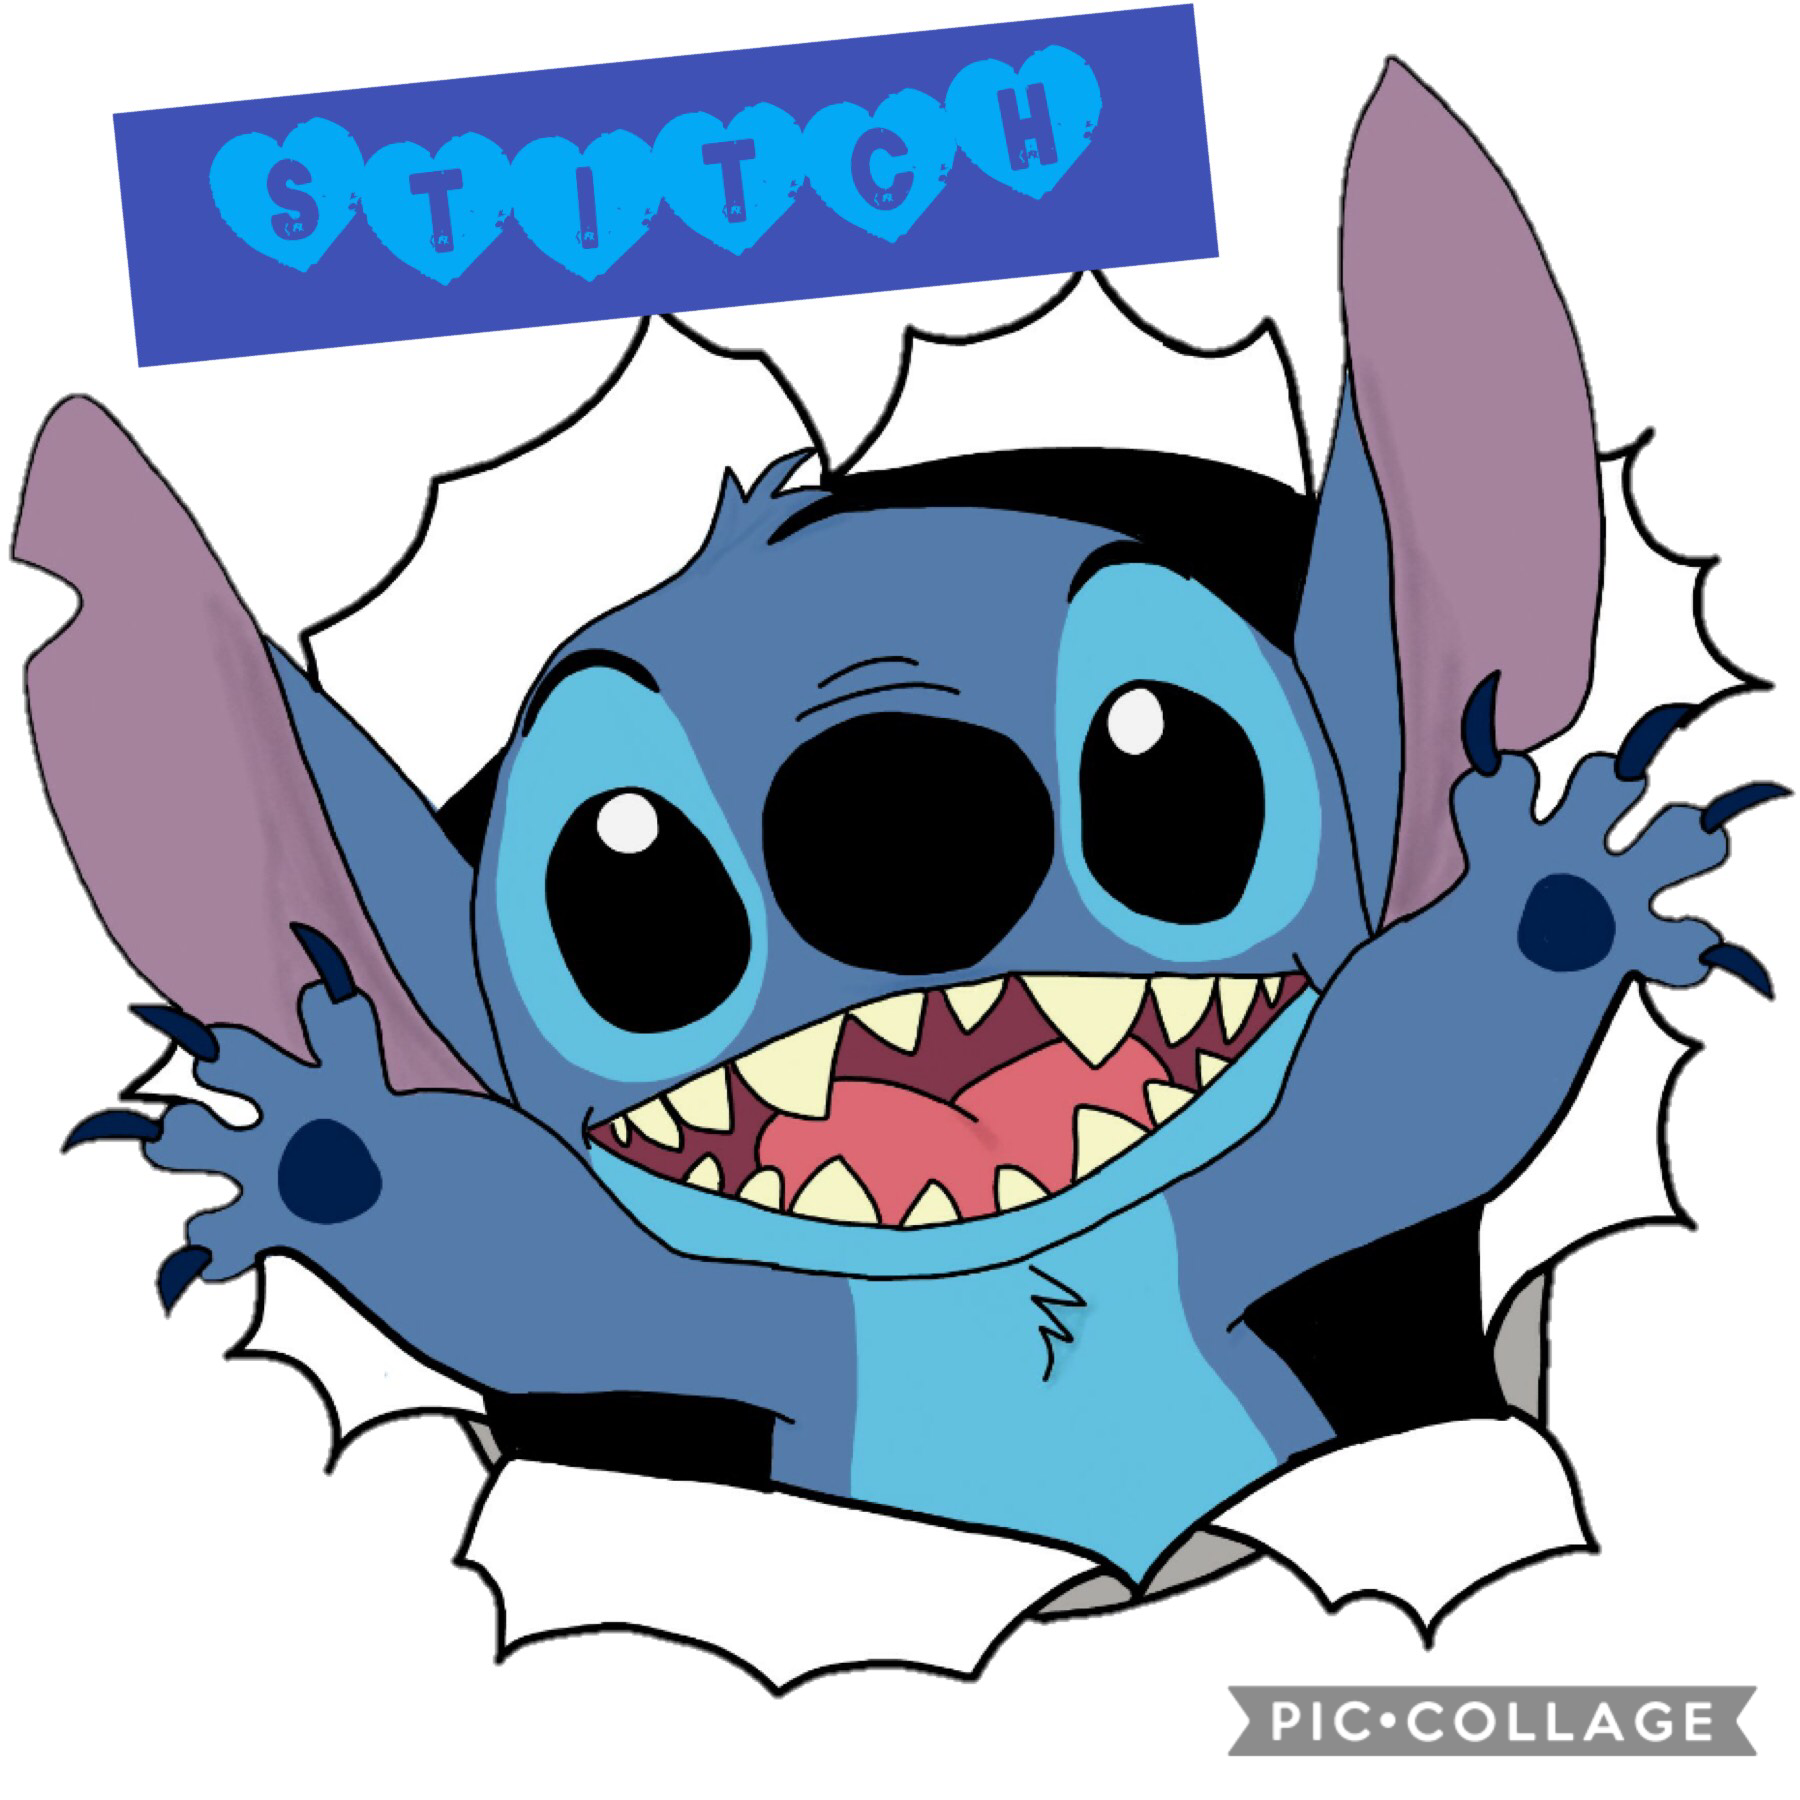 Stitch is sooo cute